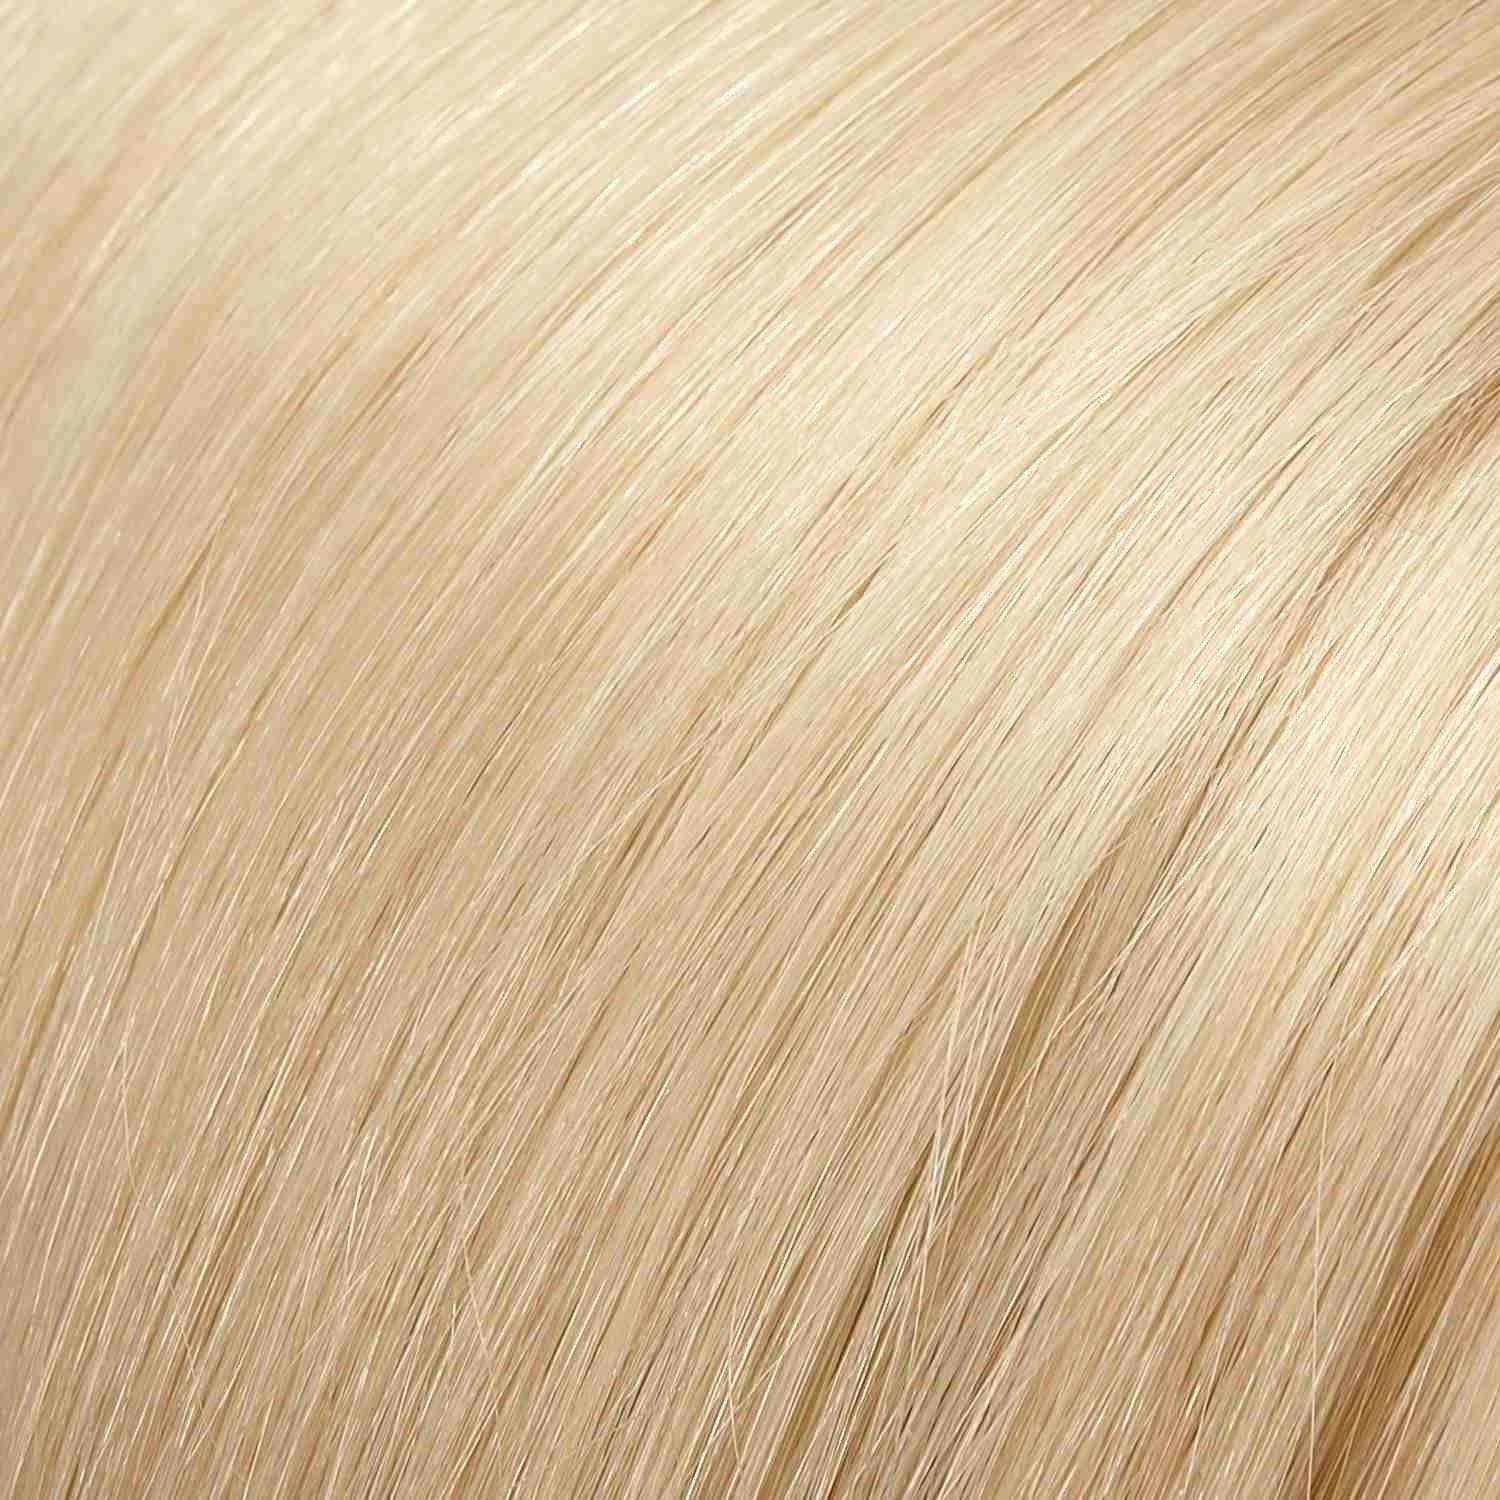 easiHalo 12" by Jon Renau | 100% Human Hair Extension (Halo)